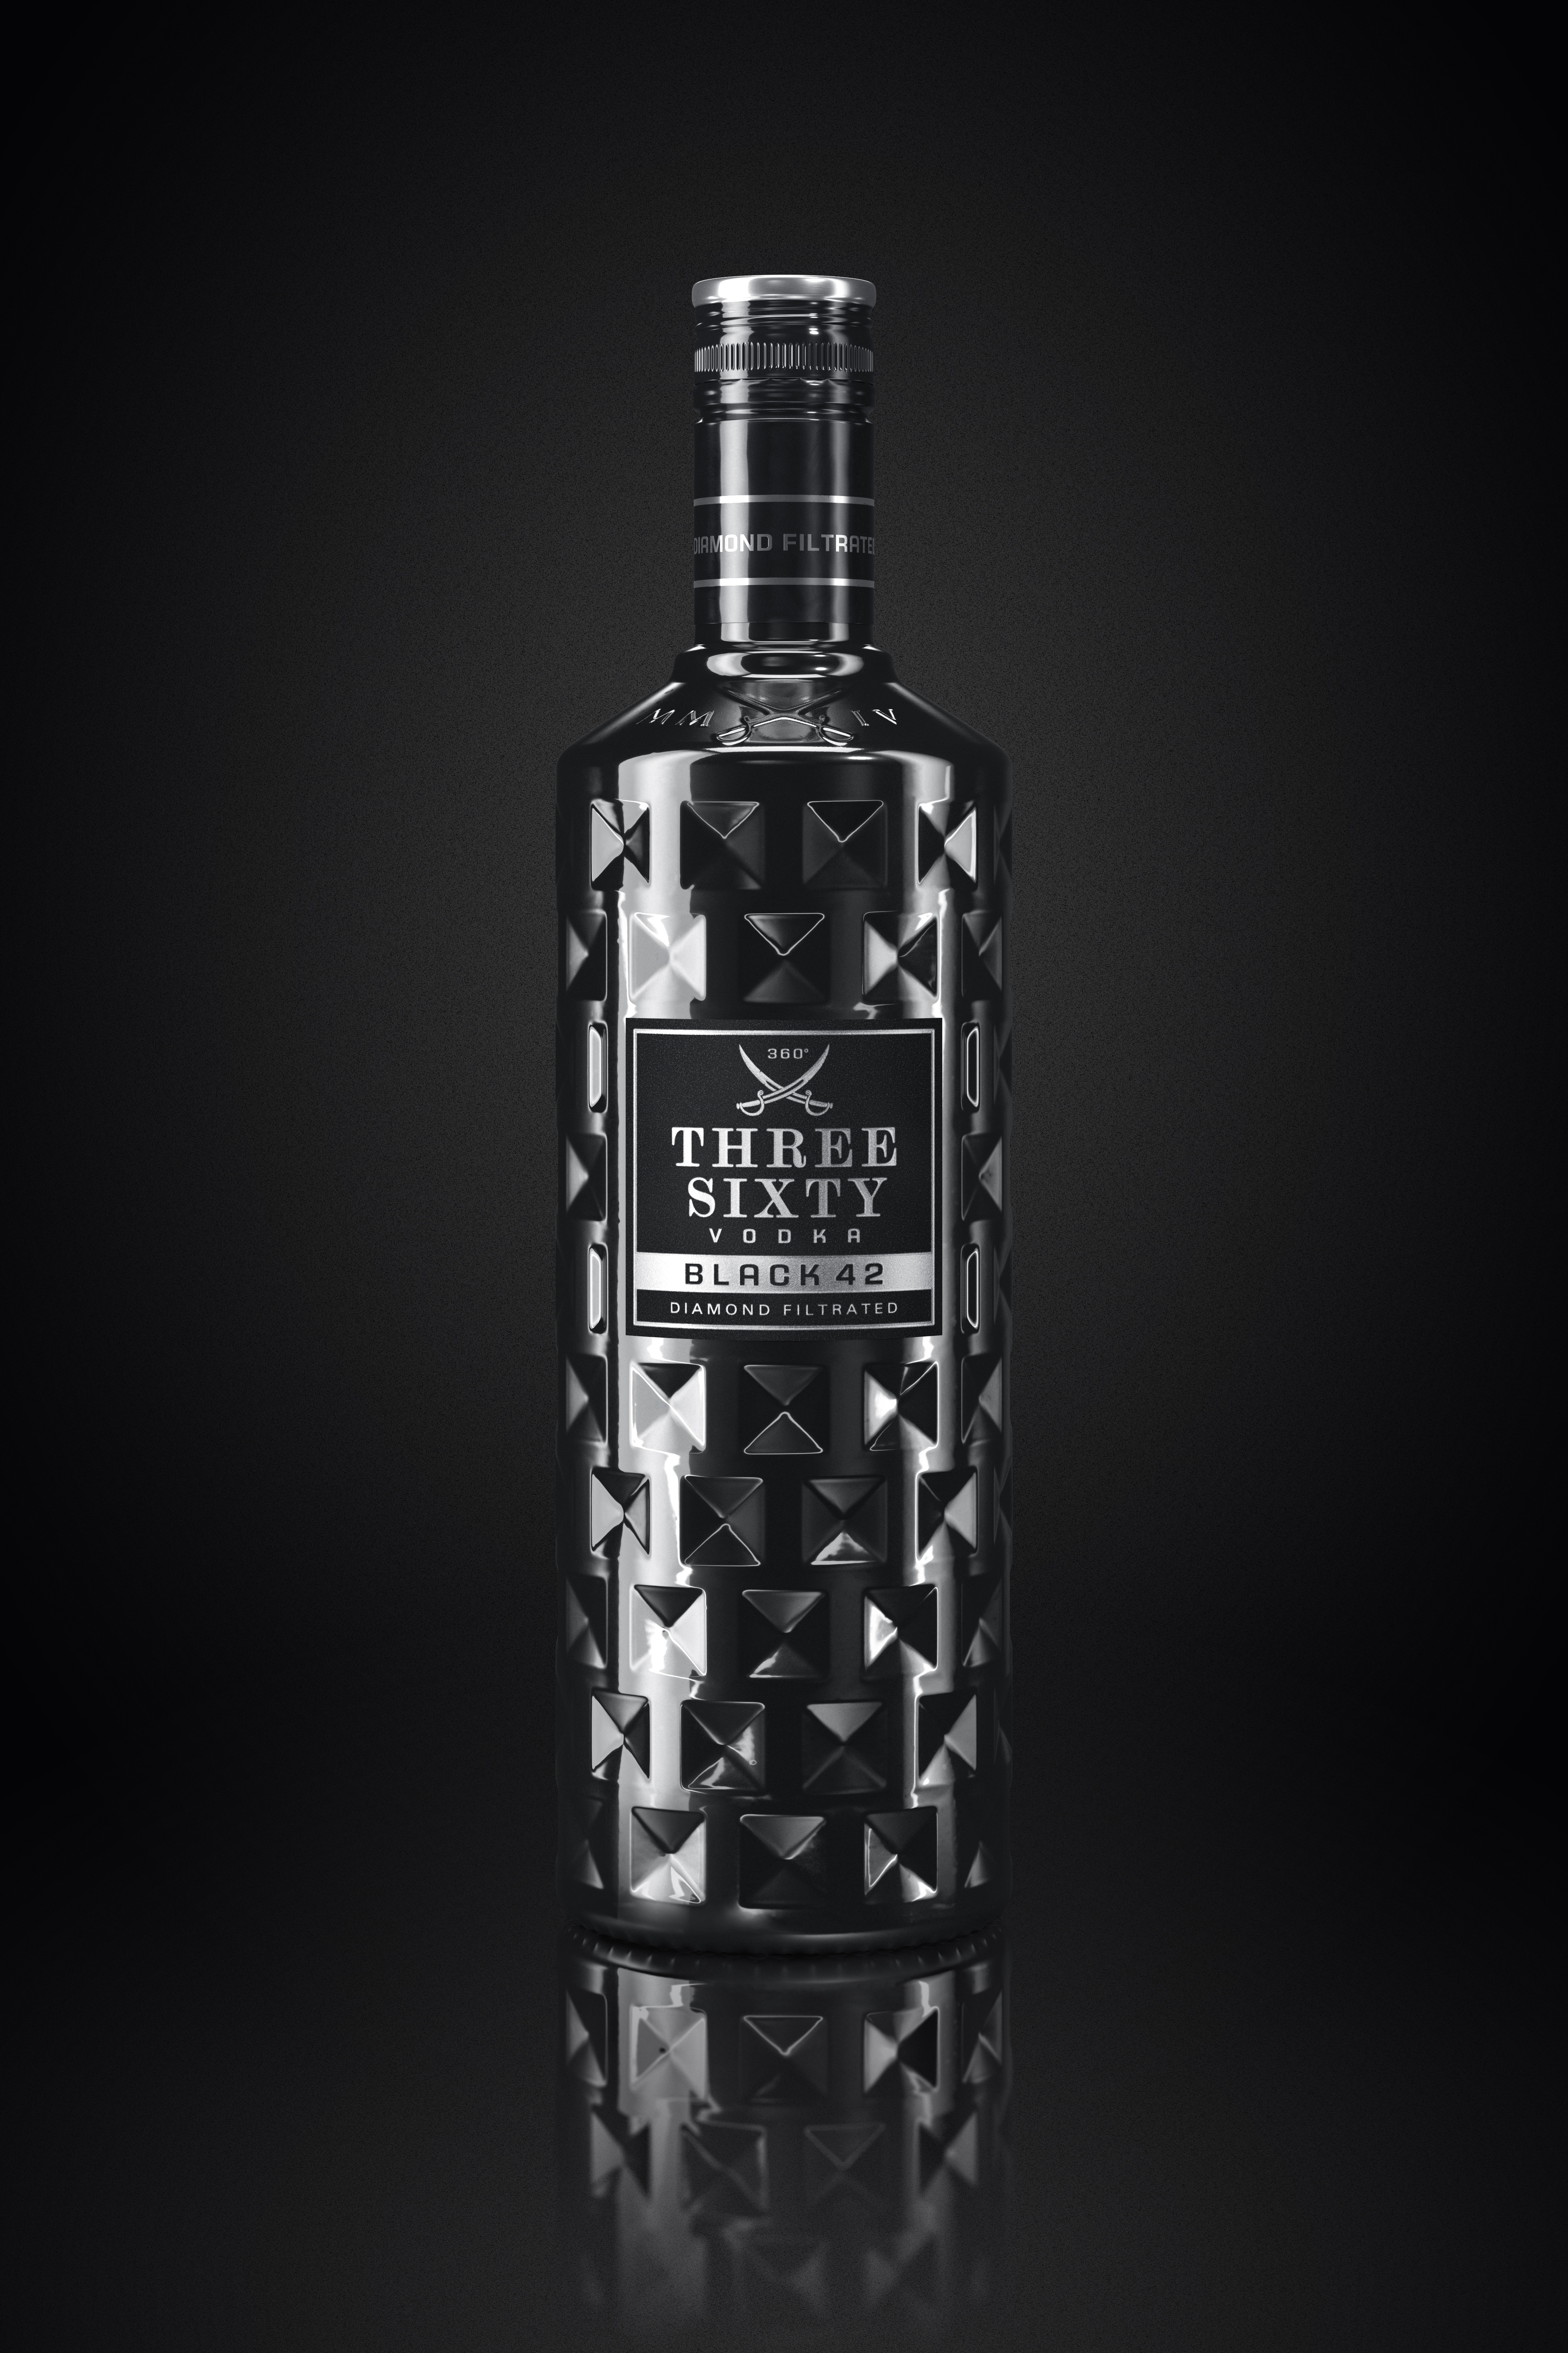 Three Sixty Black 42 Vodka 0,7l 700ml (42% Vol) + 6x Black Longdrink-Gläser eckig schwarz -[Enthält Sulfite] plus Mixcompany Postkarte